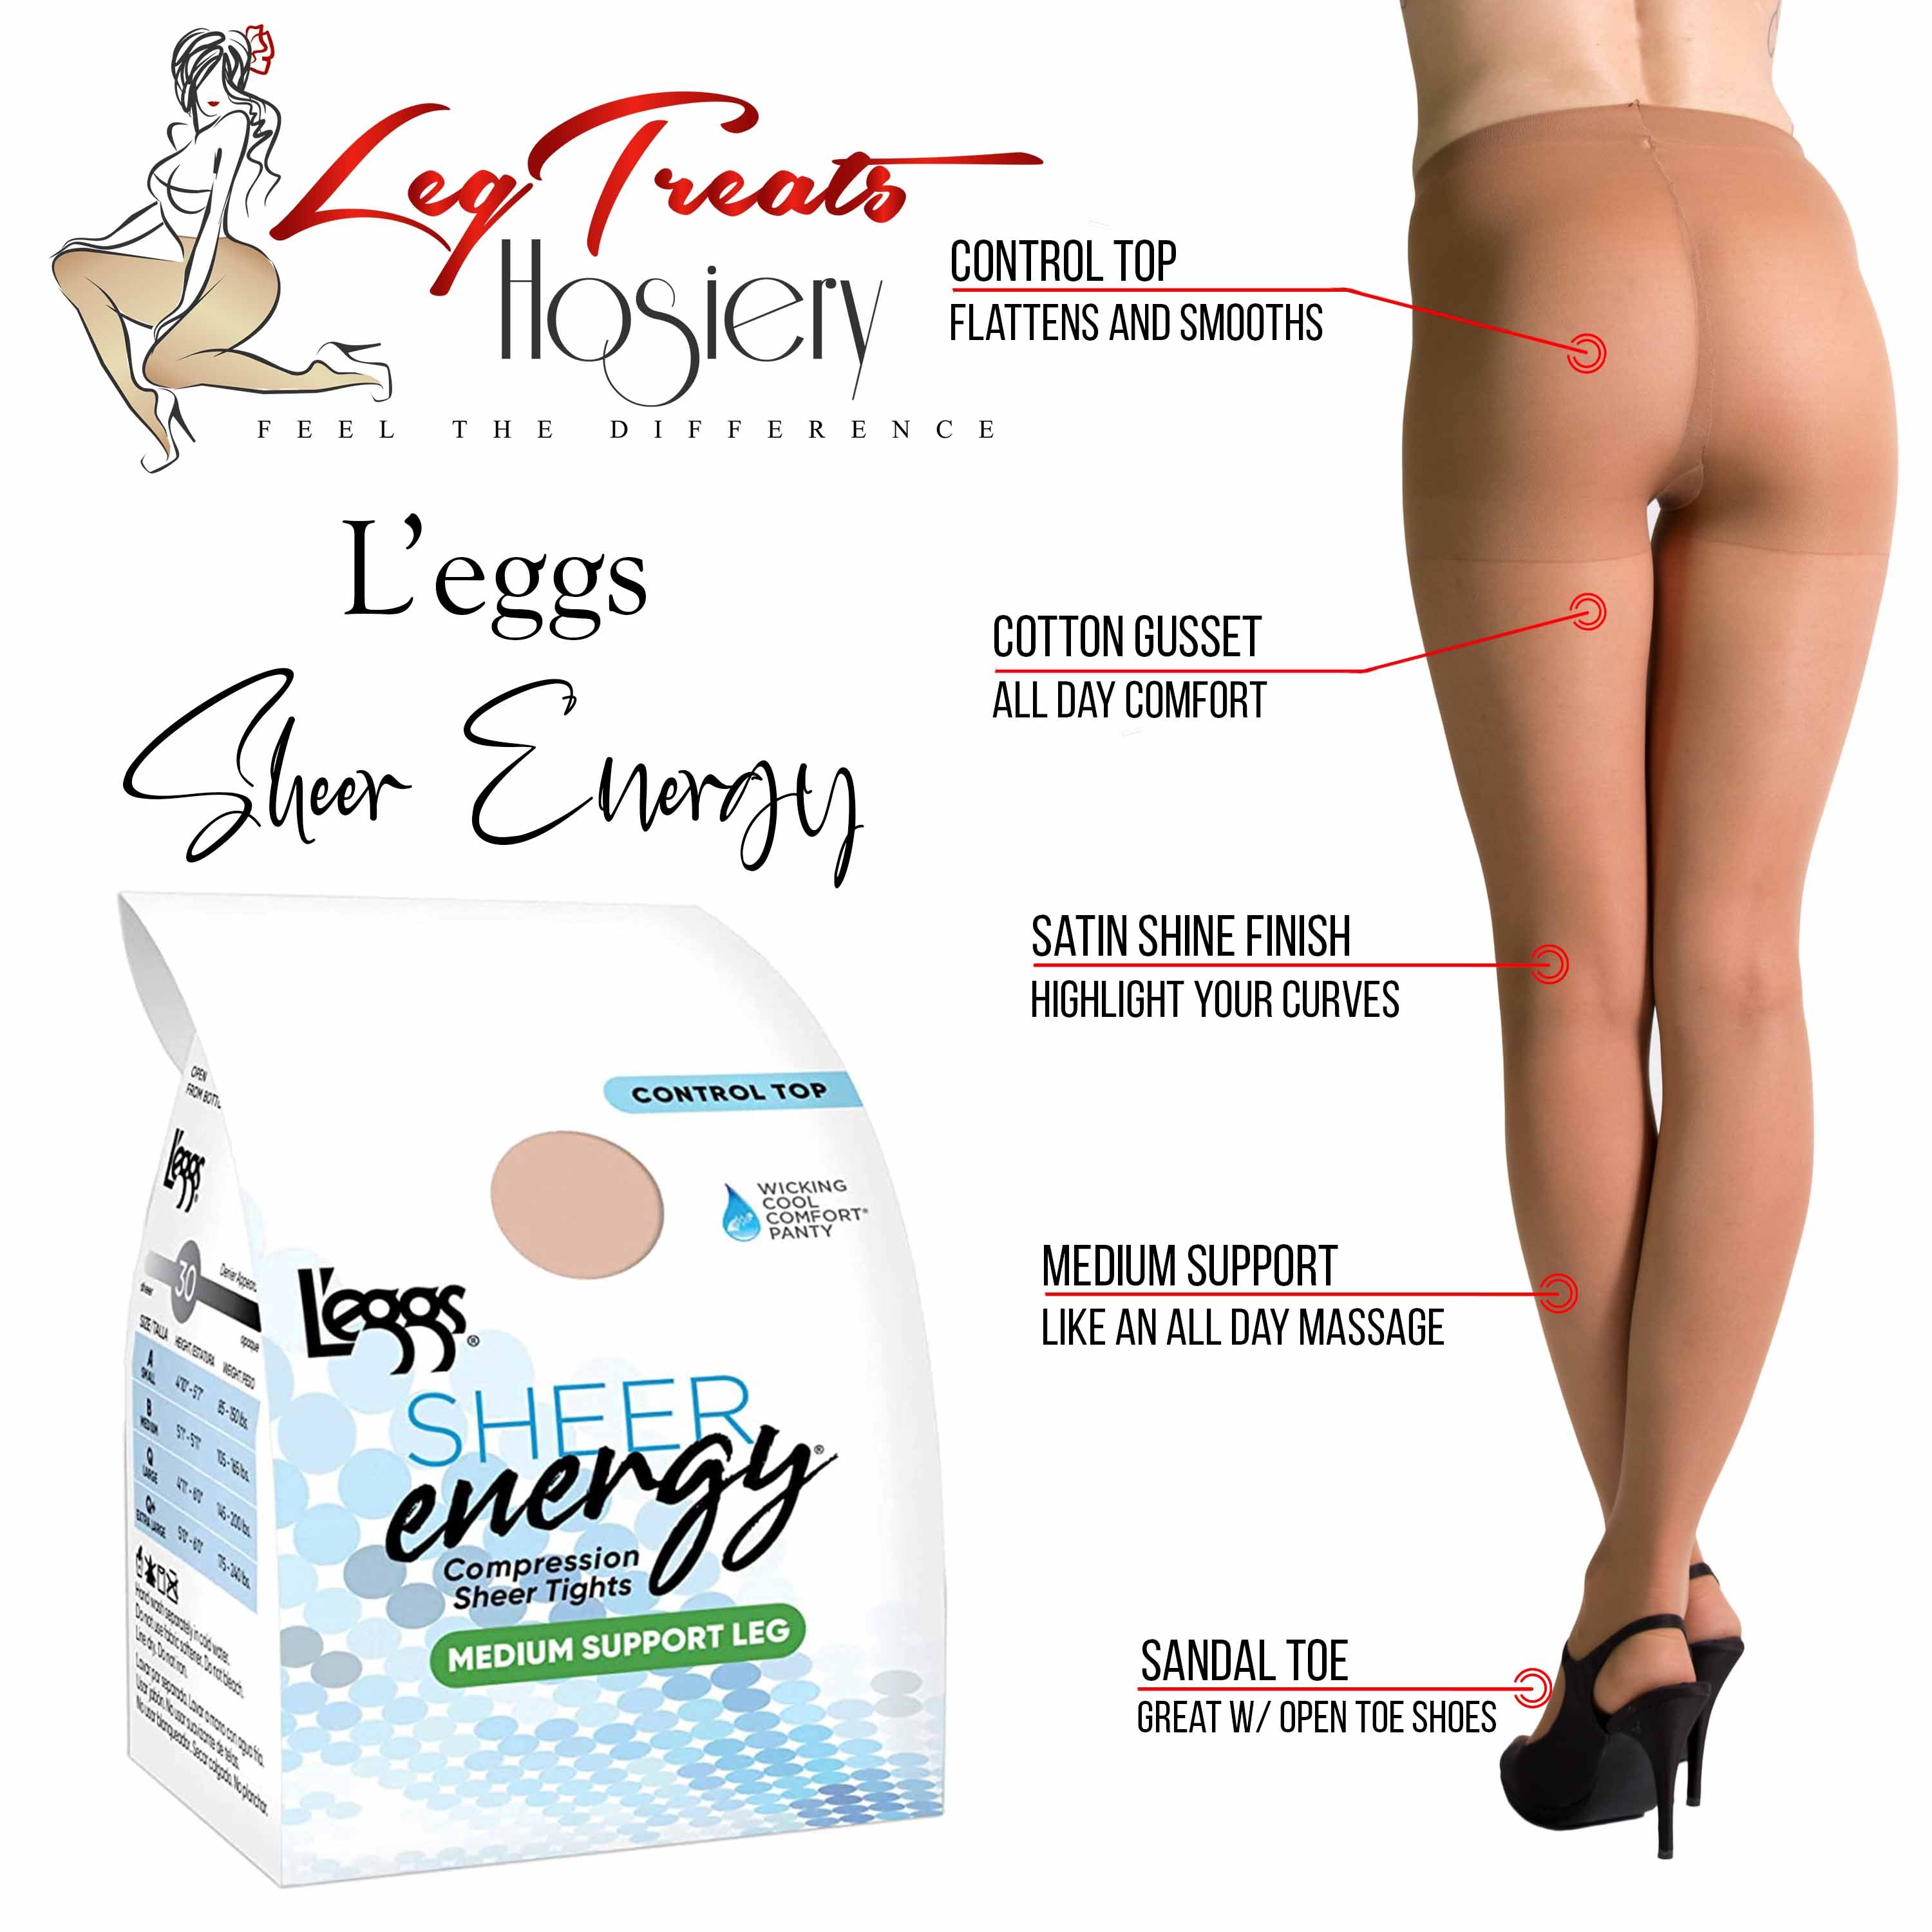 cheryl honea recommends Sheer Energy Thigh Highs